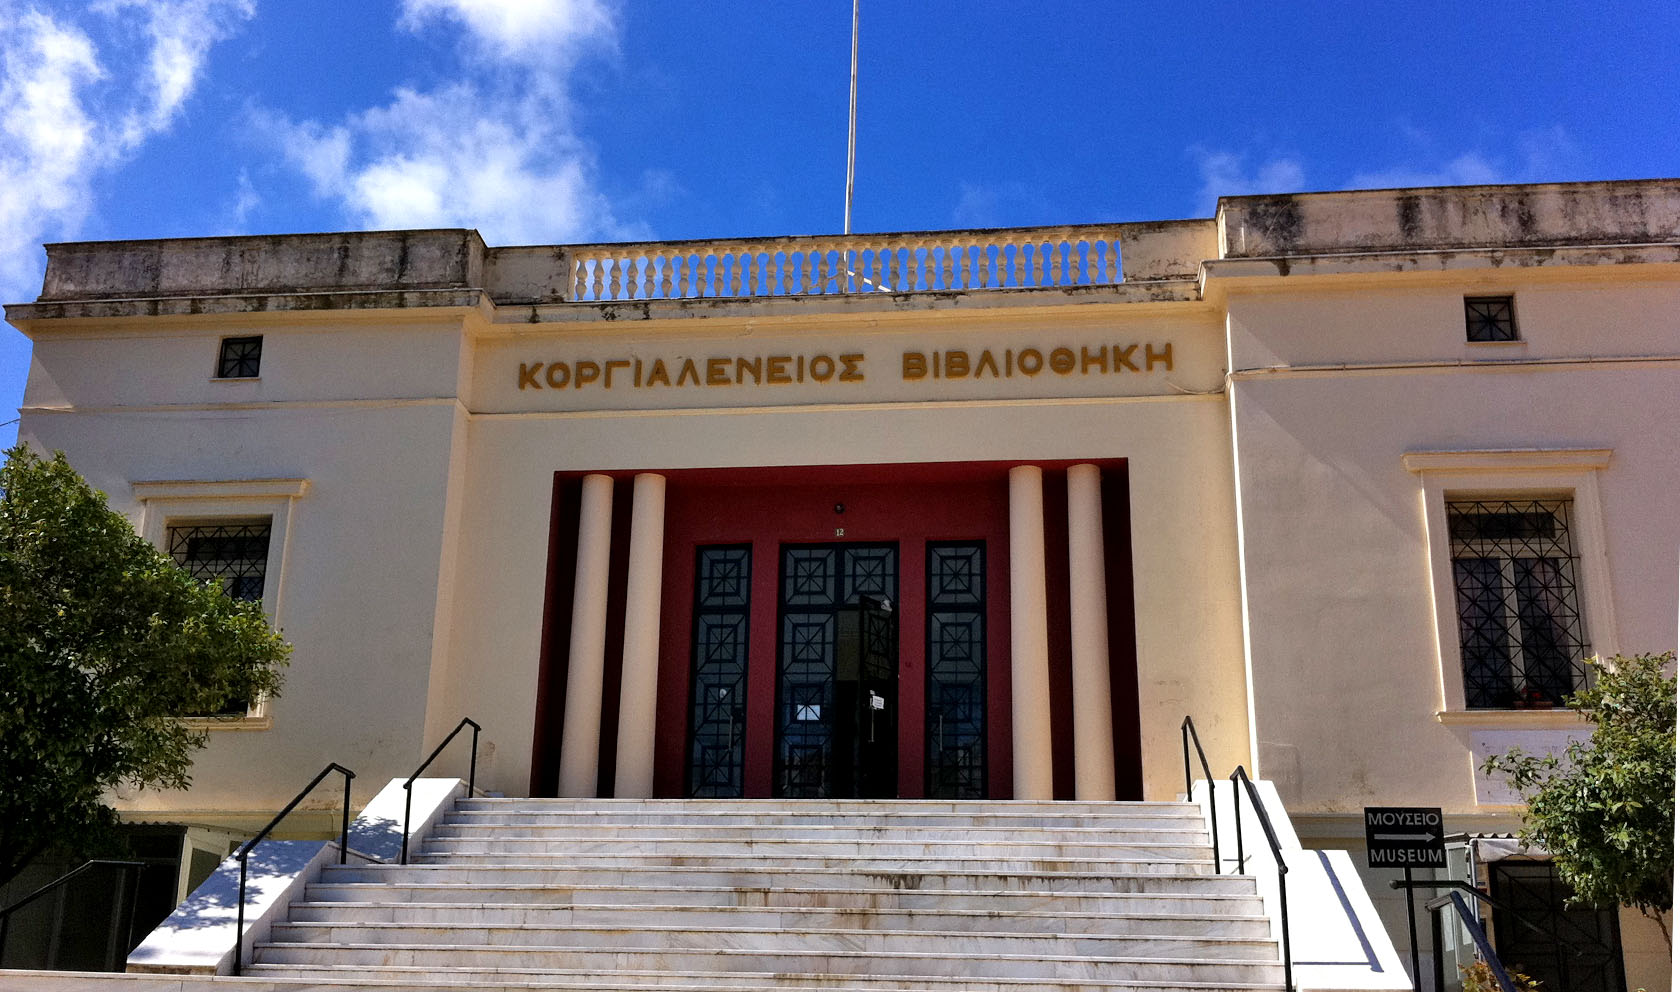 Korgialenios Library